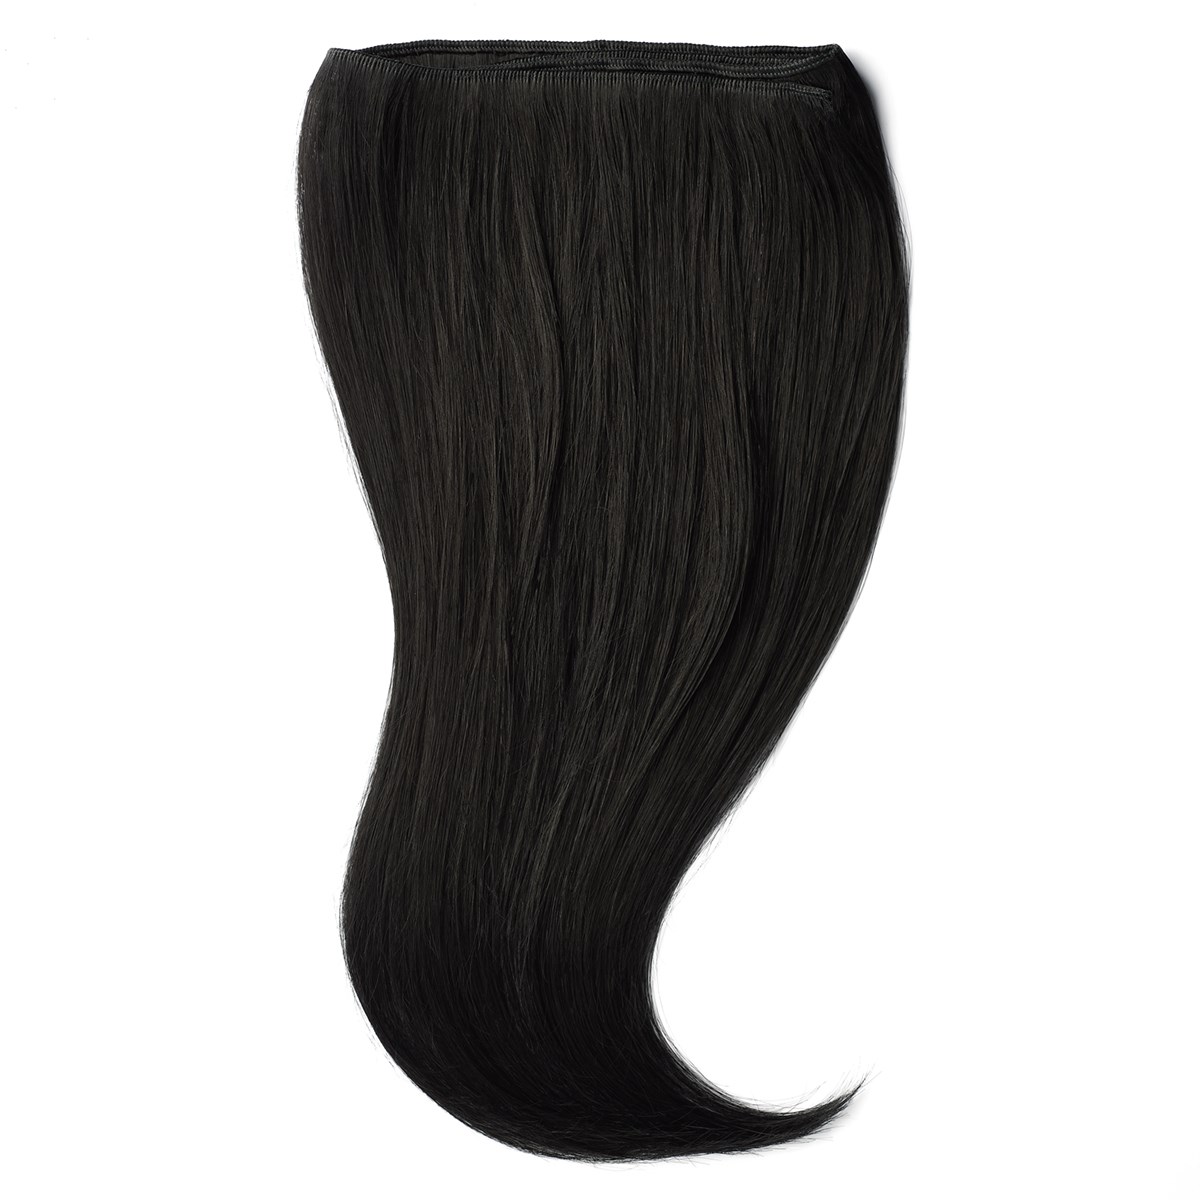 Rapunzel of Sweden Hair Weft Weft Extensions - Single Layer 60 cm 1.0